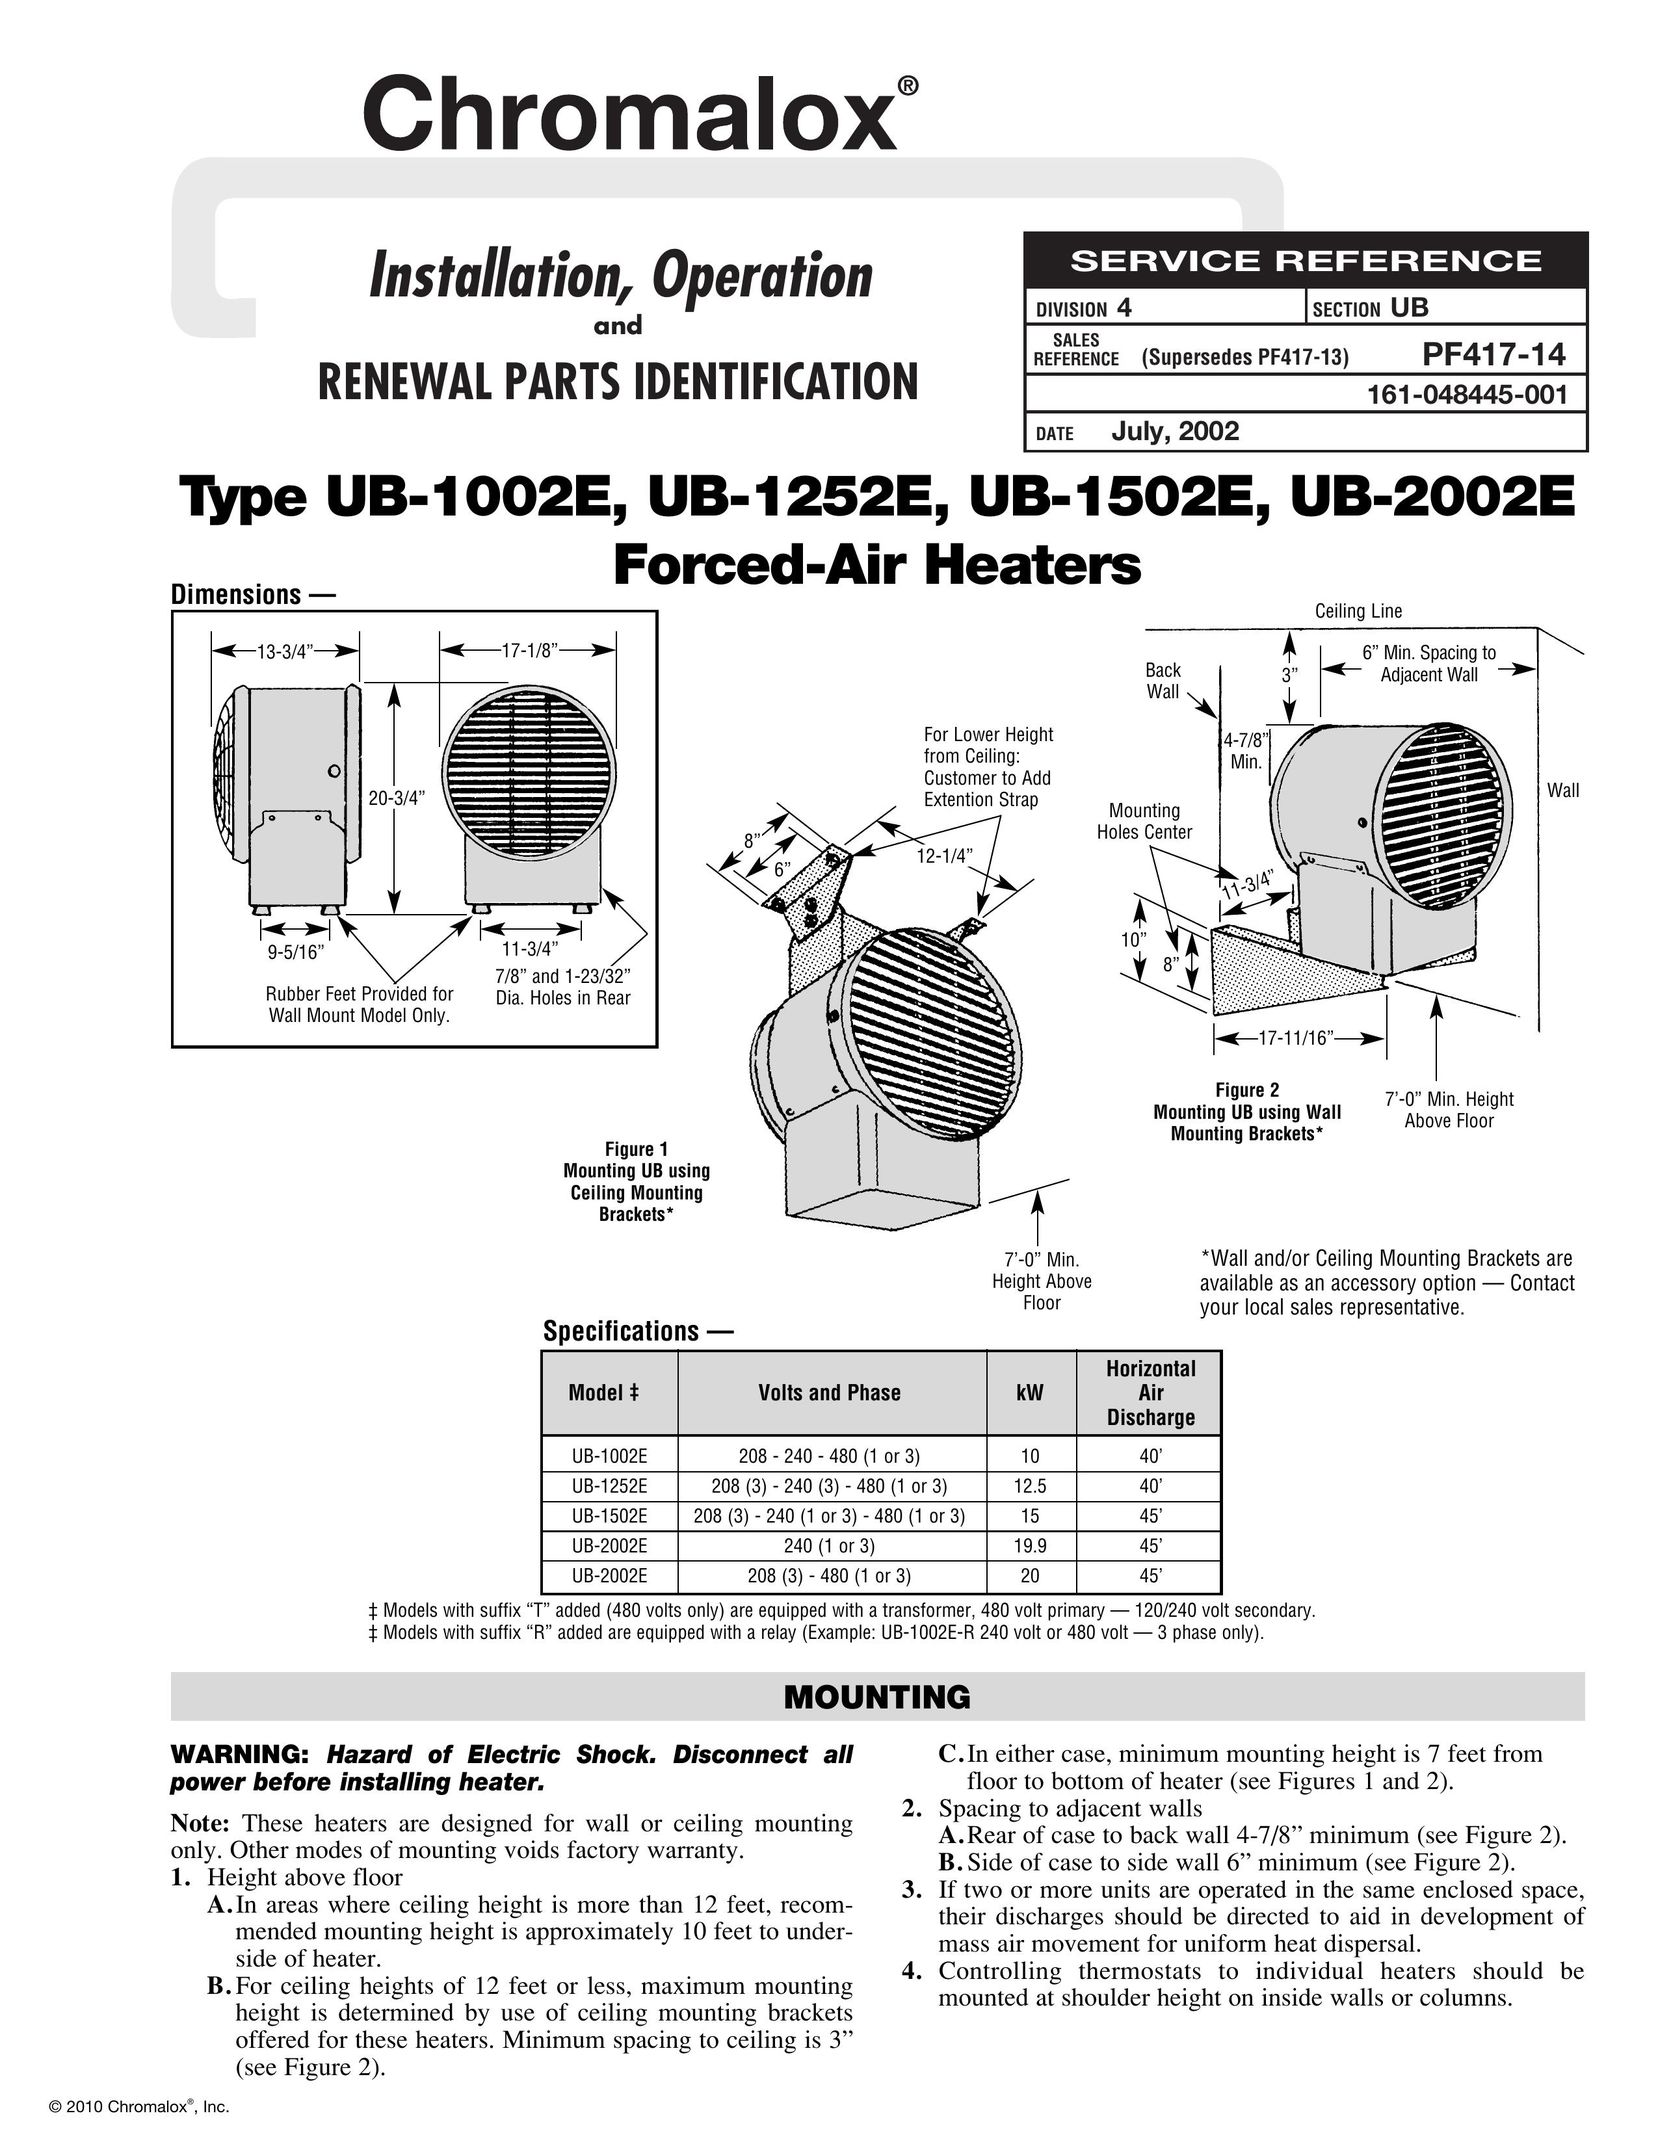 Chromalox UB-2002E Air Conditioner User Manual